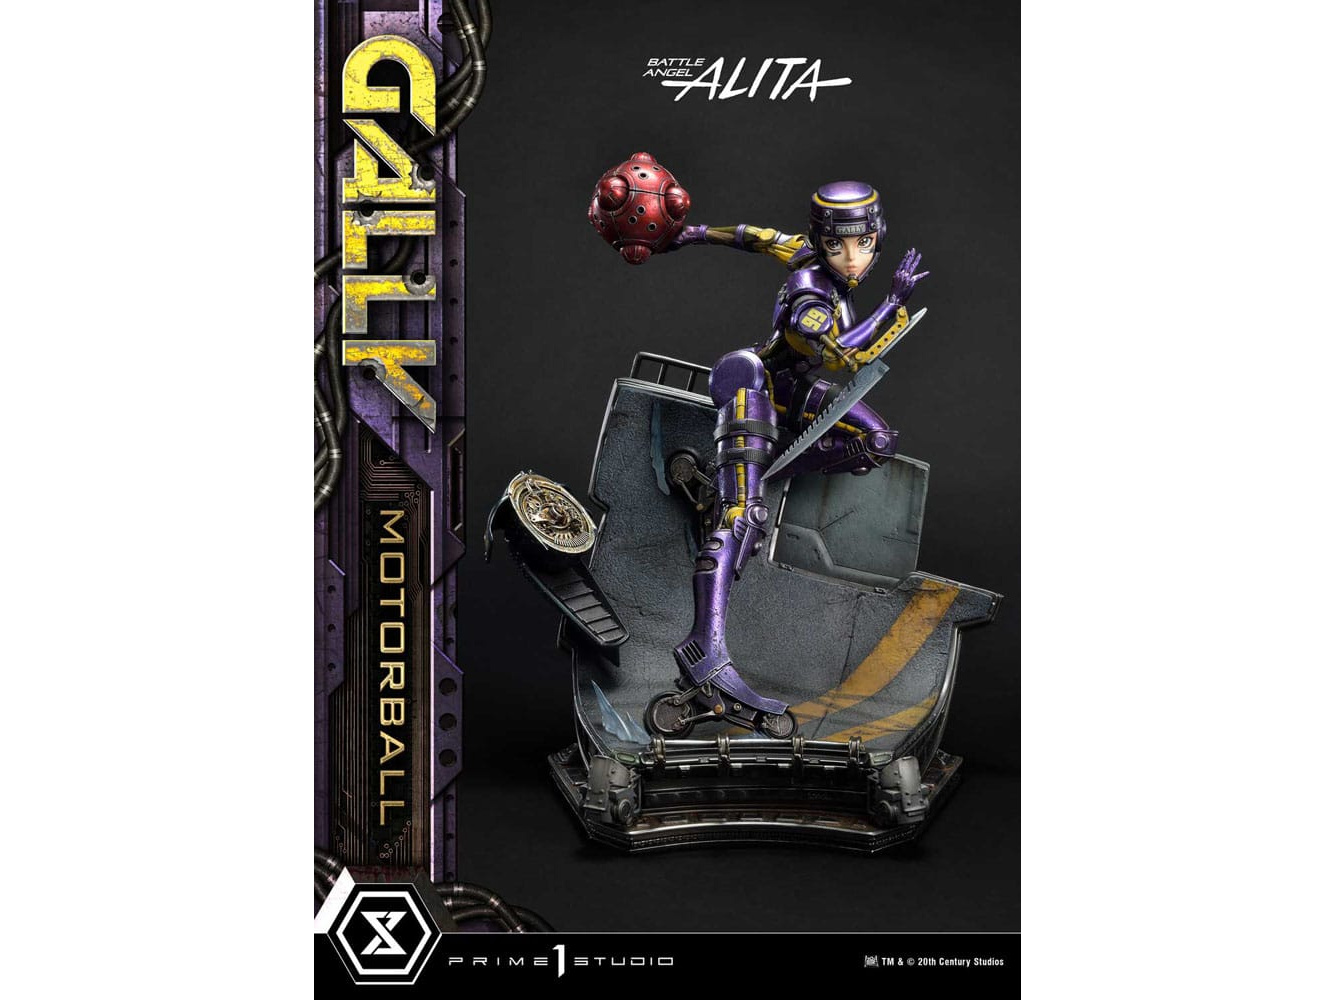 Alita: Battle Angel Ultimate Premium Masterline Series Statue 1/4 Gally Motorball Regular Version 47 cm | 43090